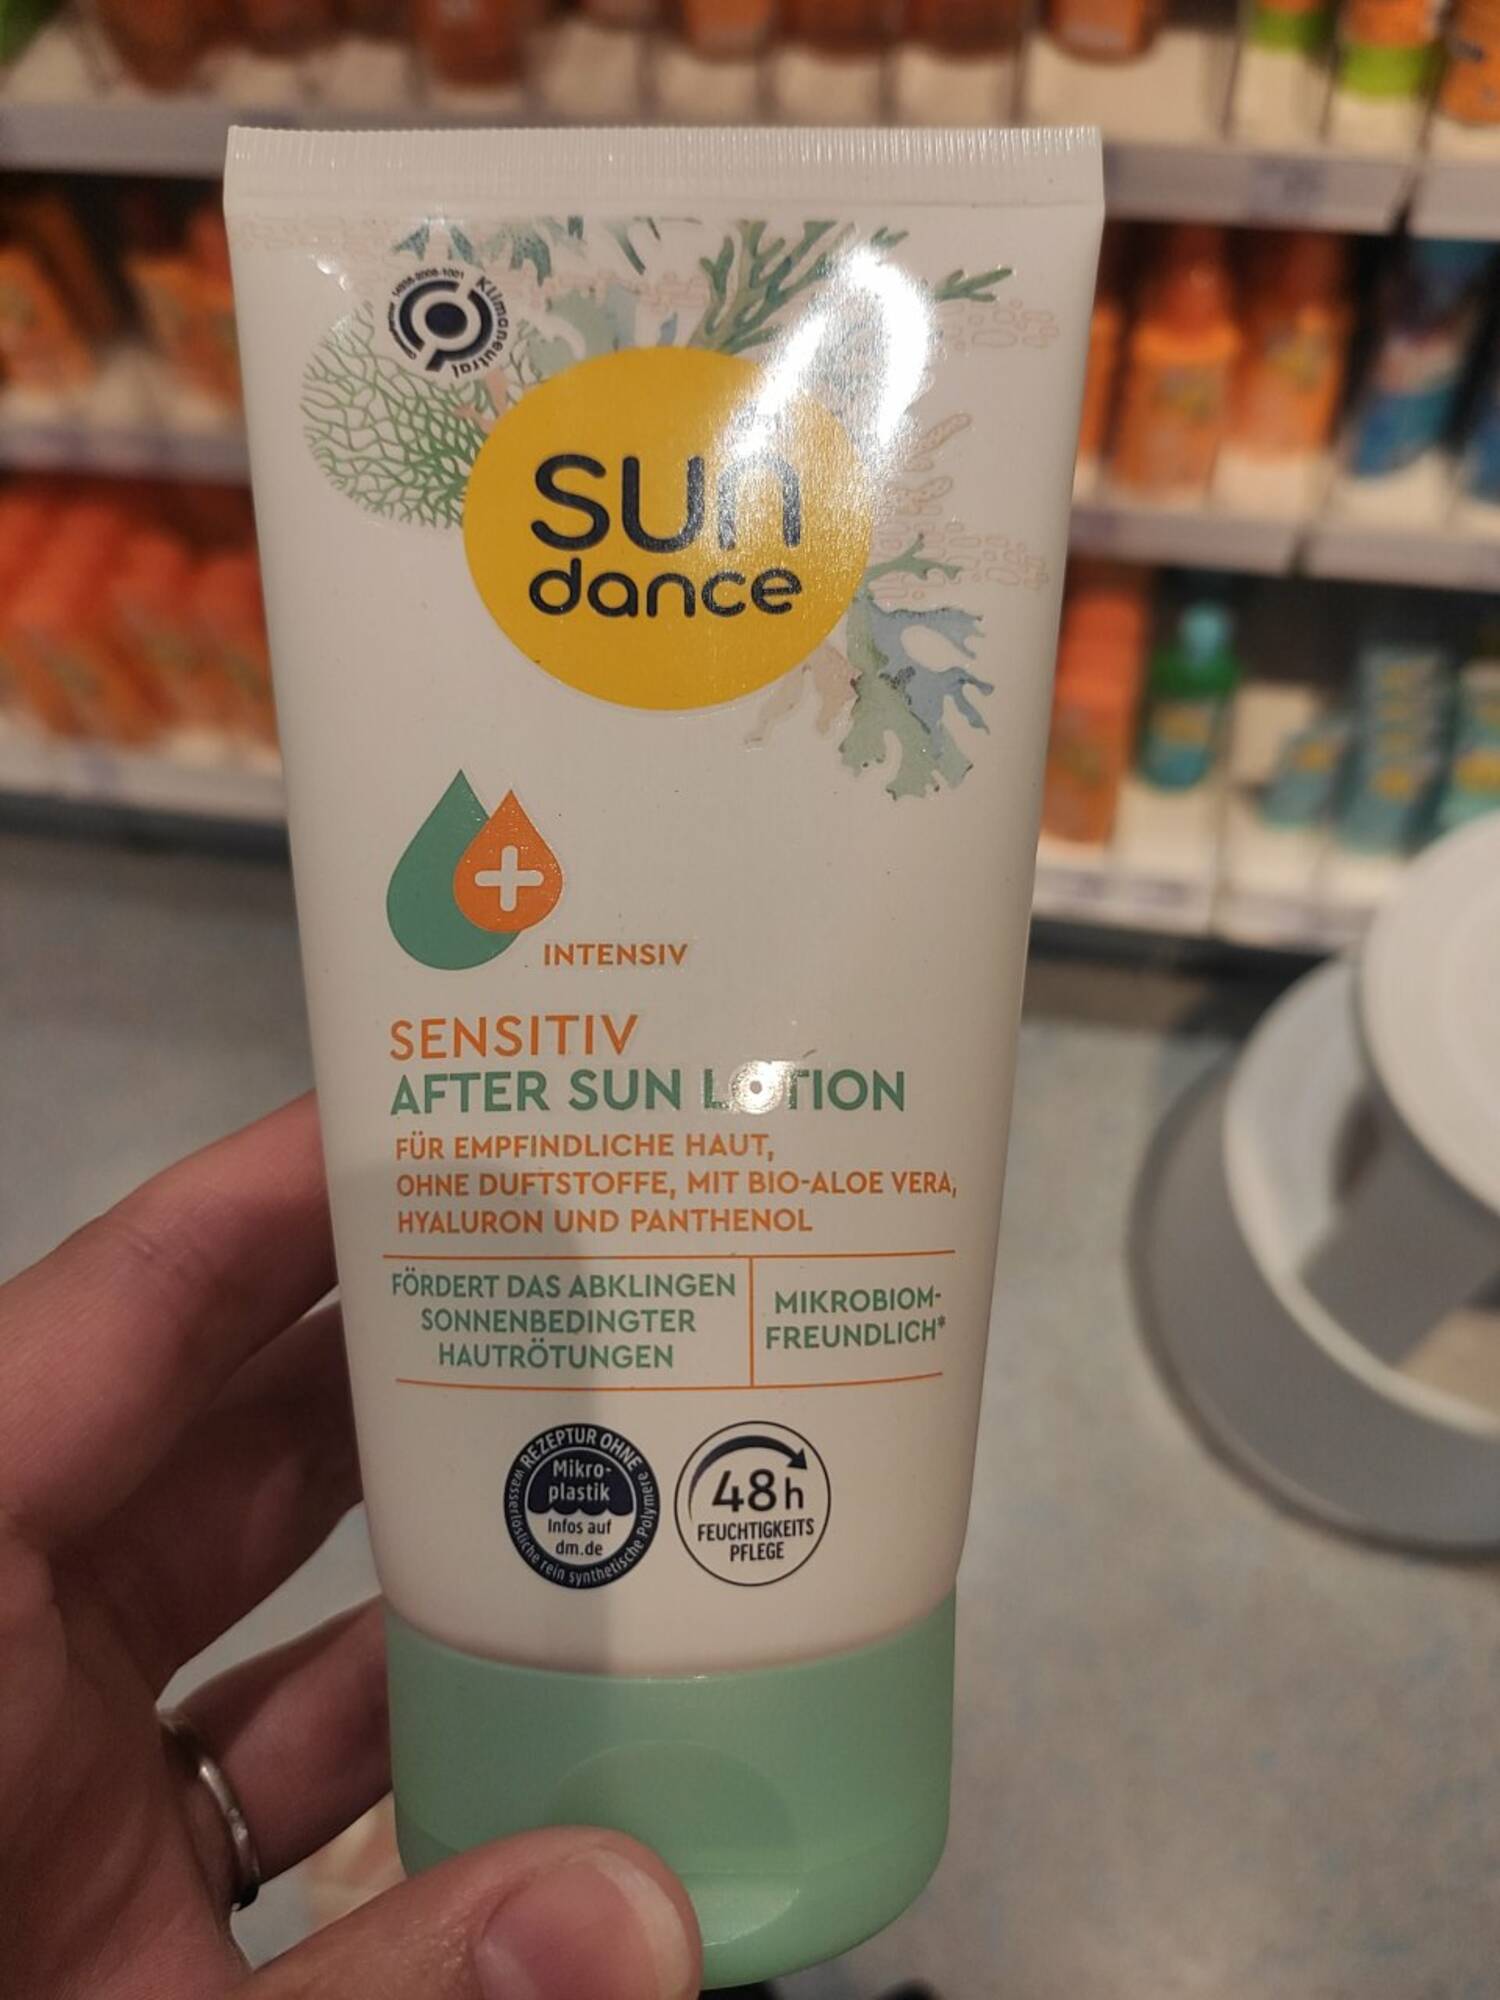 SUNDANCE - After Sun Lotion - intensiv sensitiv